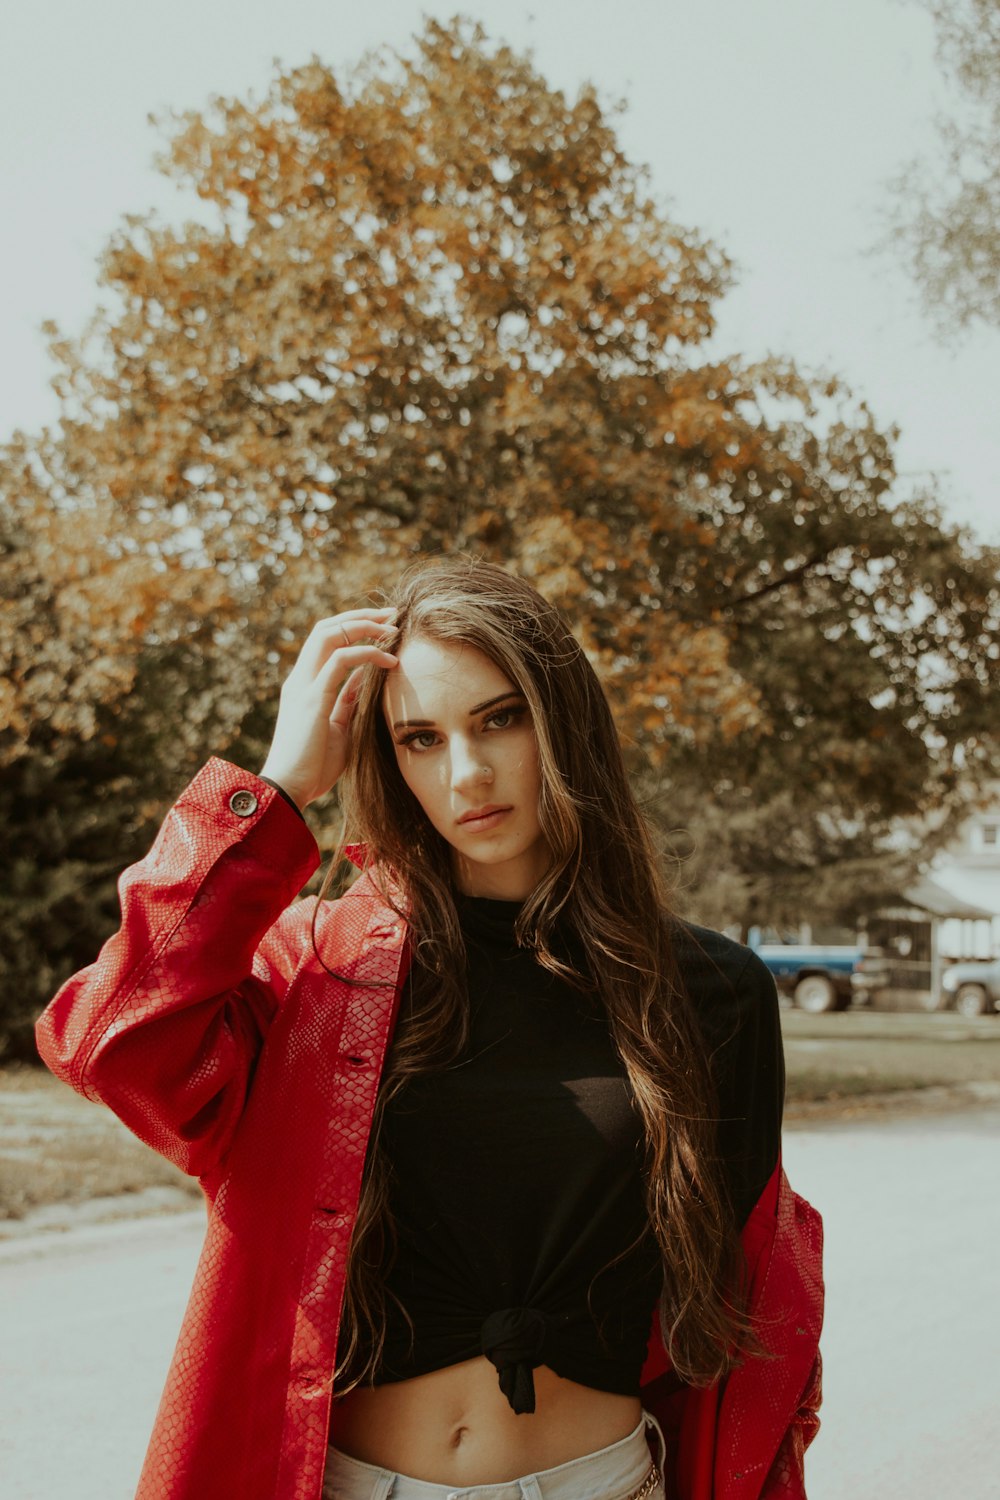 Solformørkelse kom videre kultur Woman in red leather jacket standing near brown trees during daytime photo  – Free Jacket Image on Unsplash